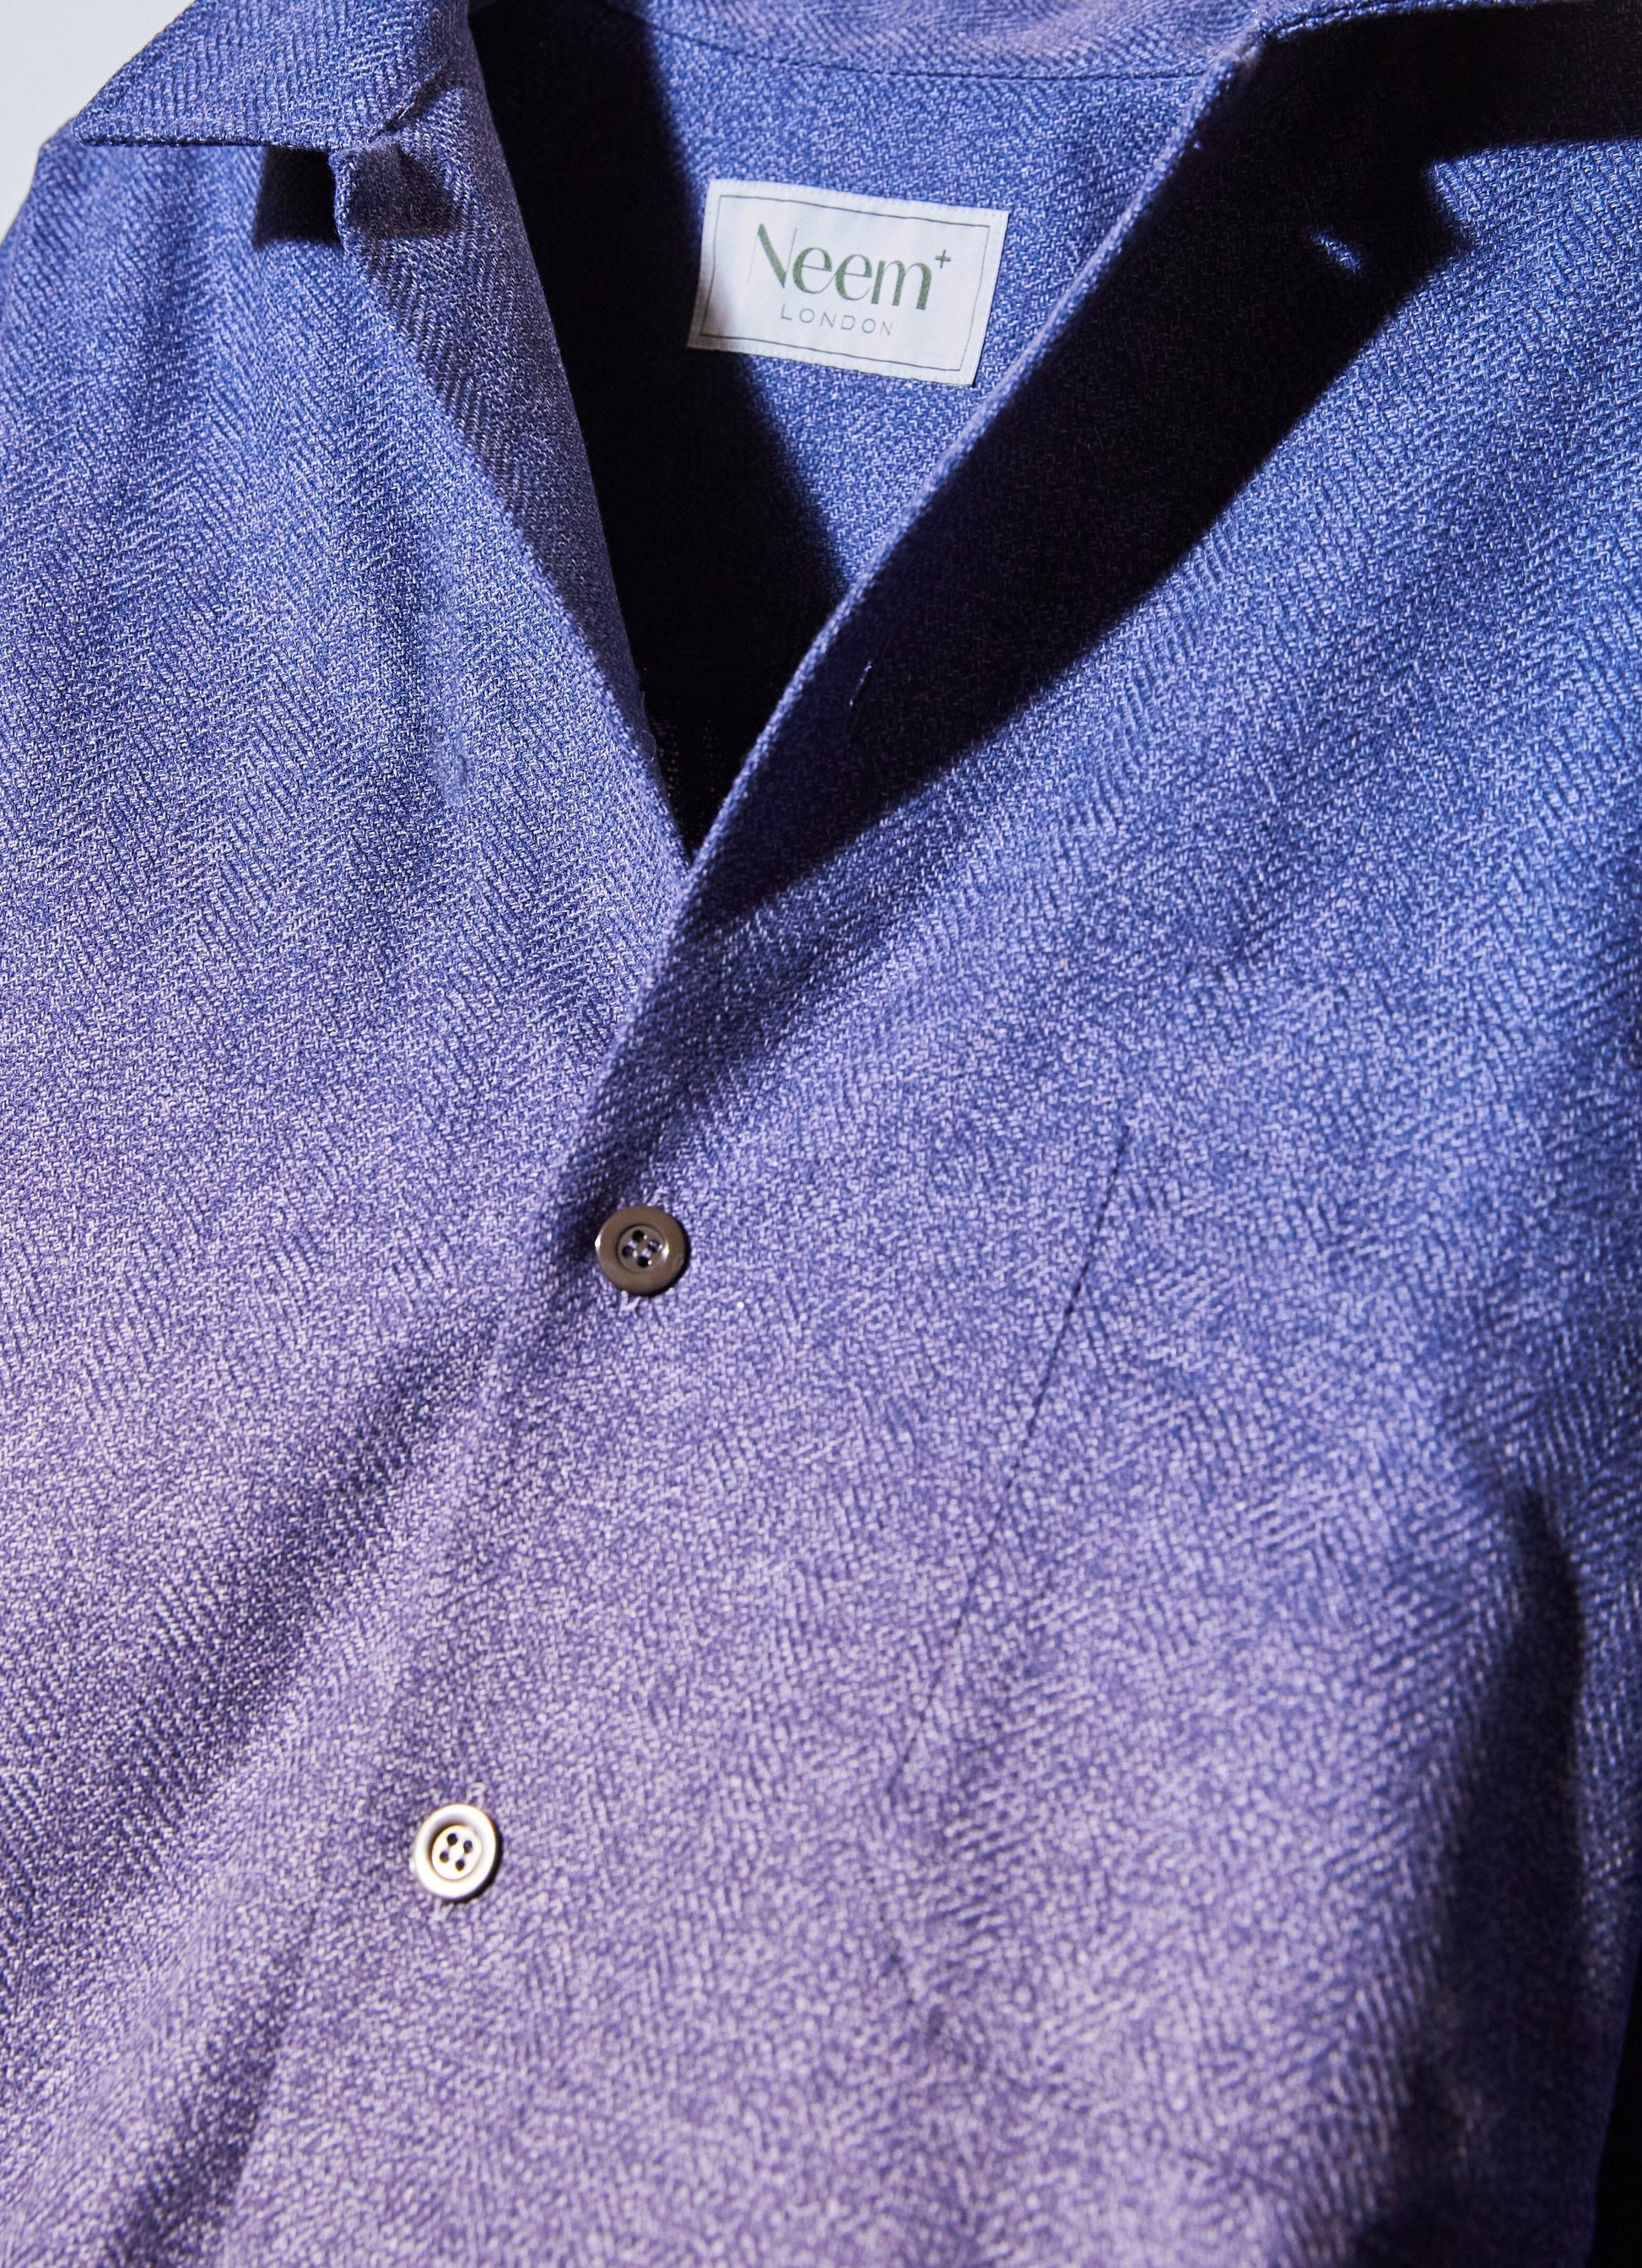 Recycled Cross Weave Spitalfields Blue Overshirt Over-Shirts Neem London 